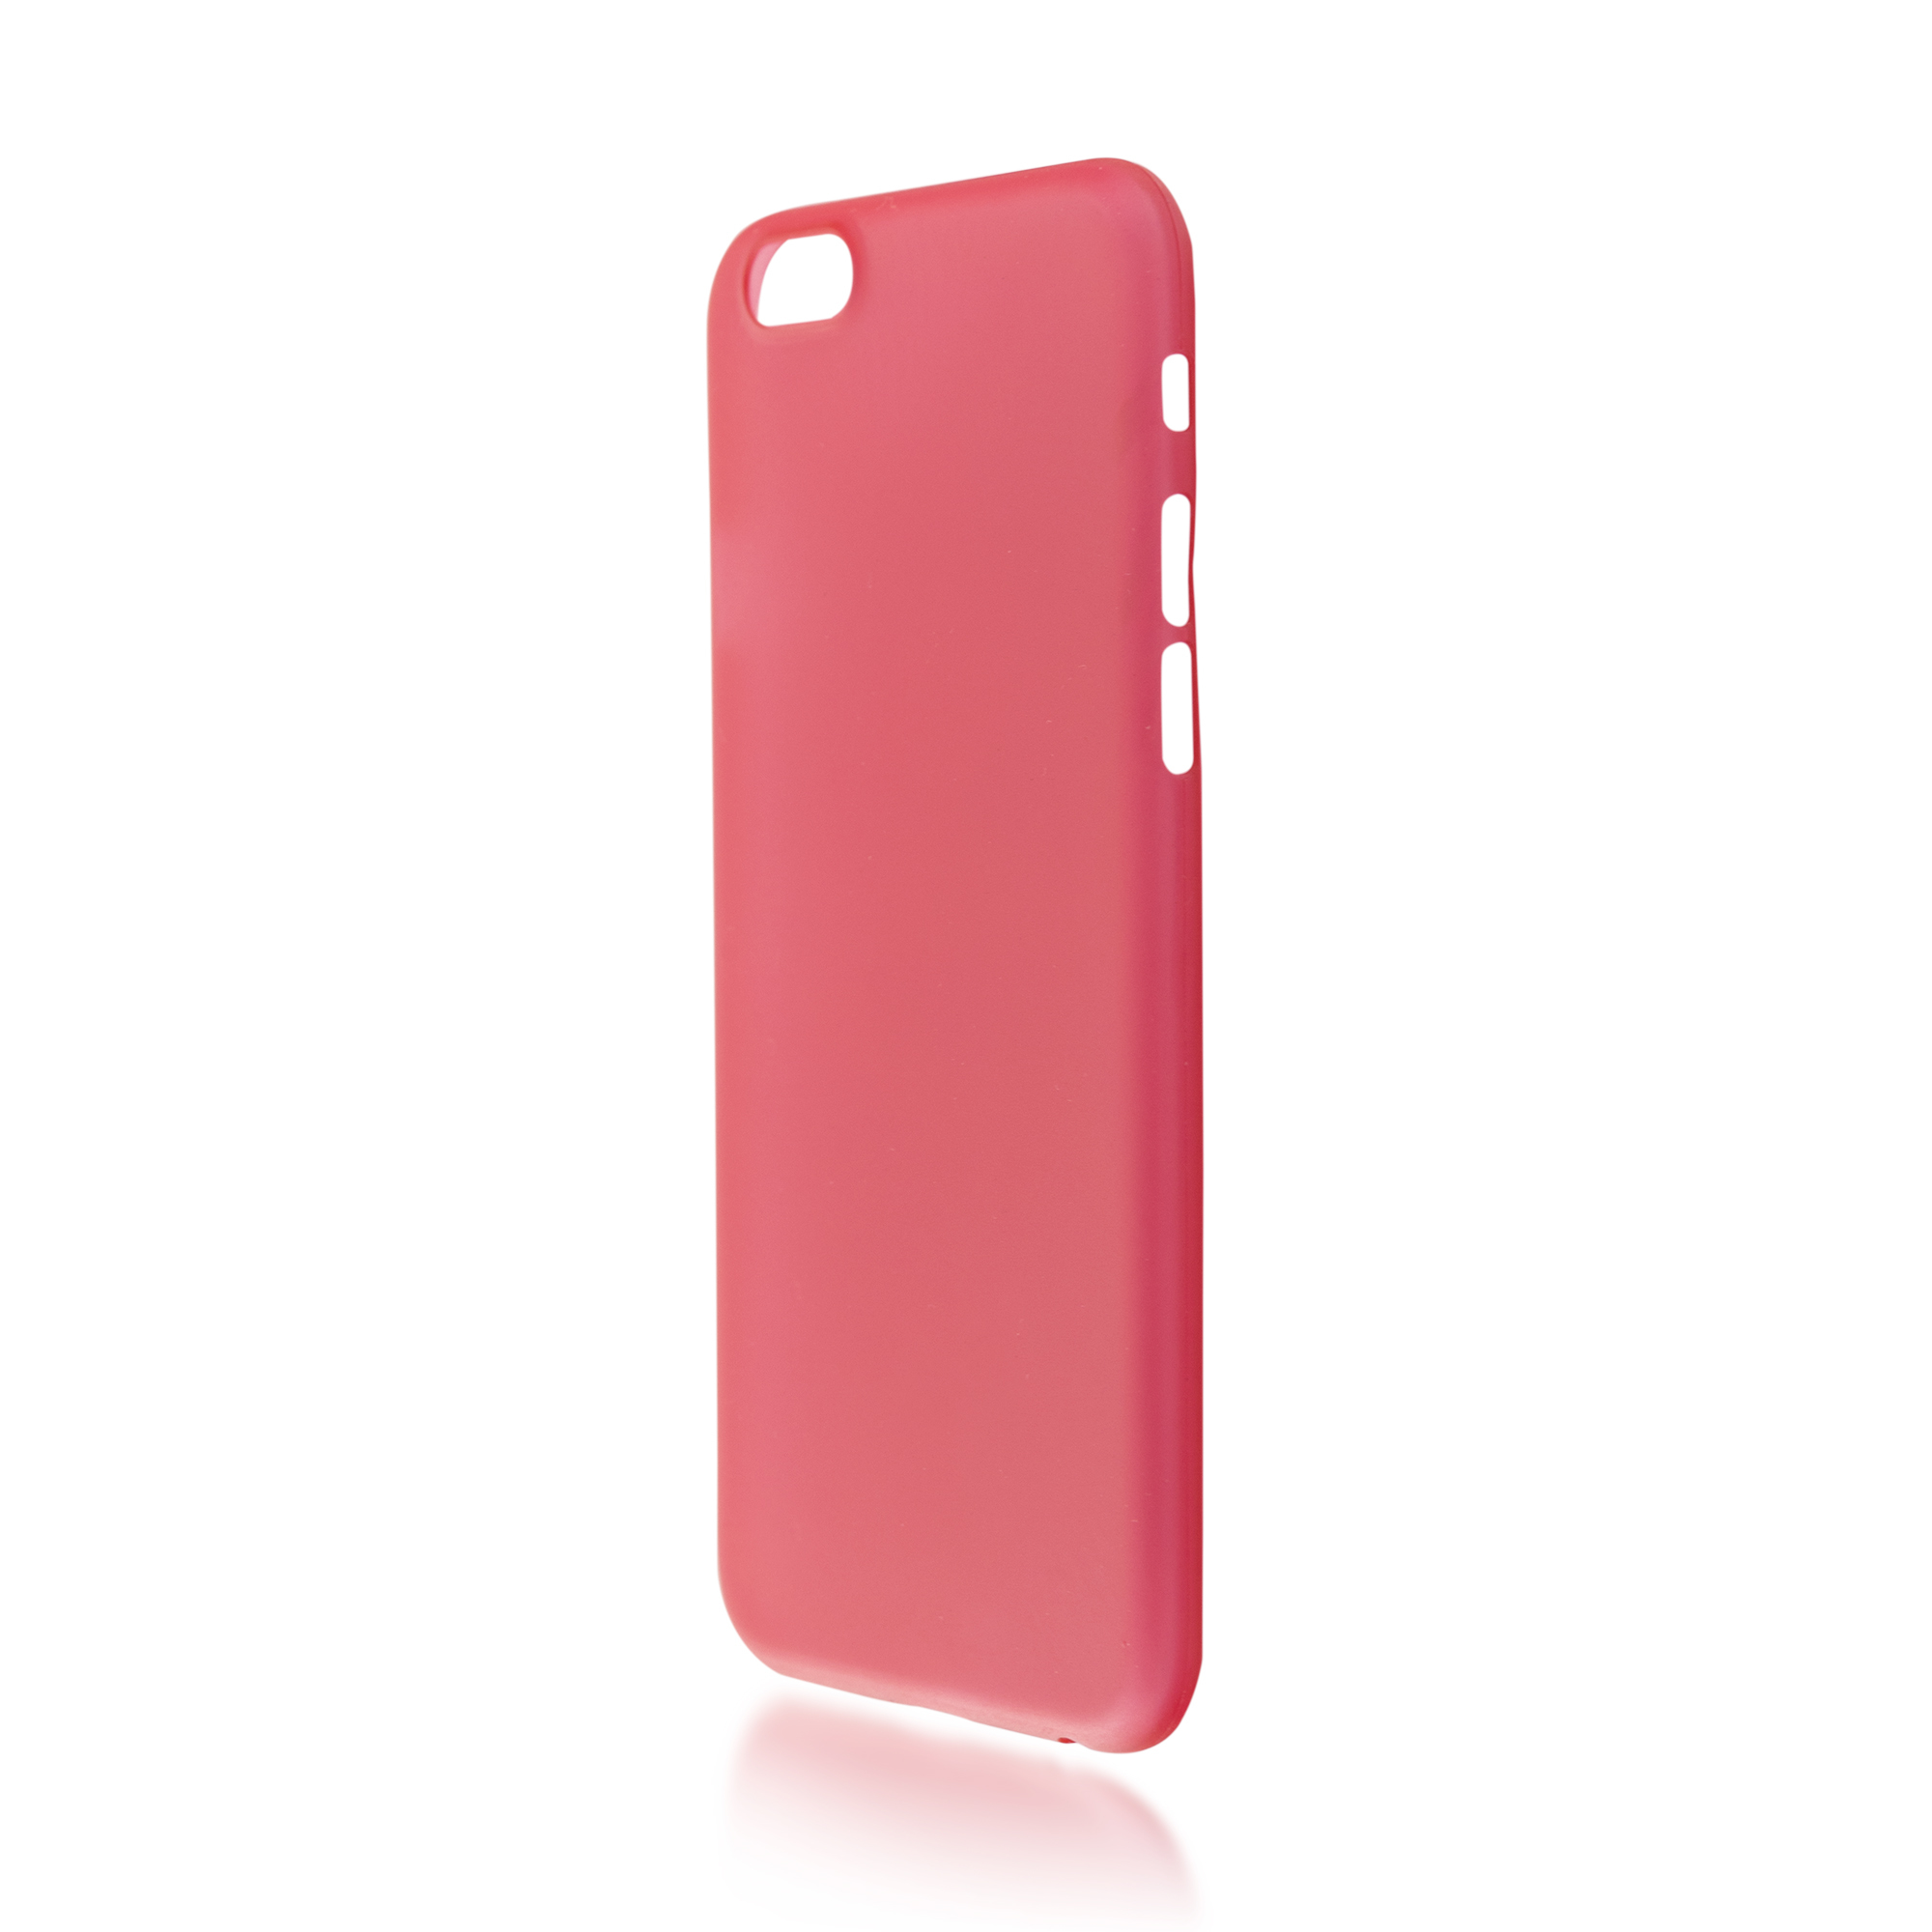 Чехол-накладка BROSCO SuperSlim для смартфона Apple iPhone 6, пластик, красный (IP6-PP-SUPERSLIM-RED)